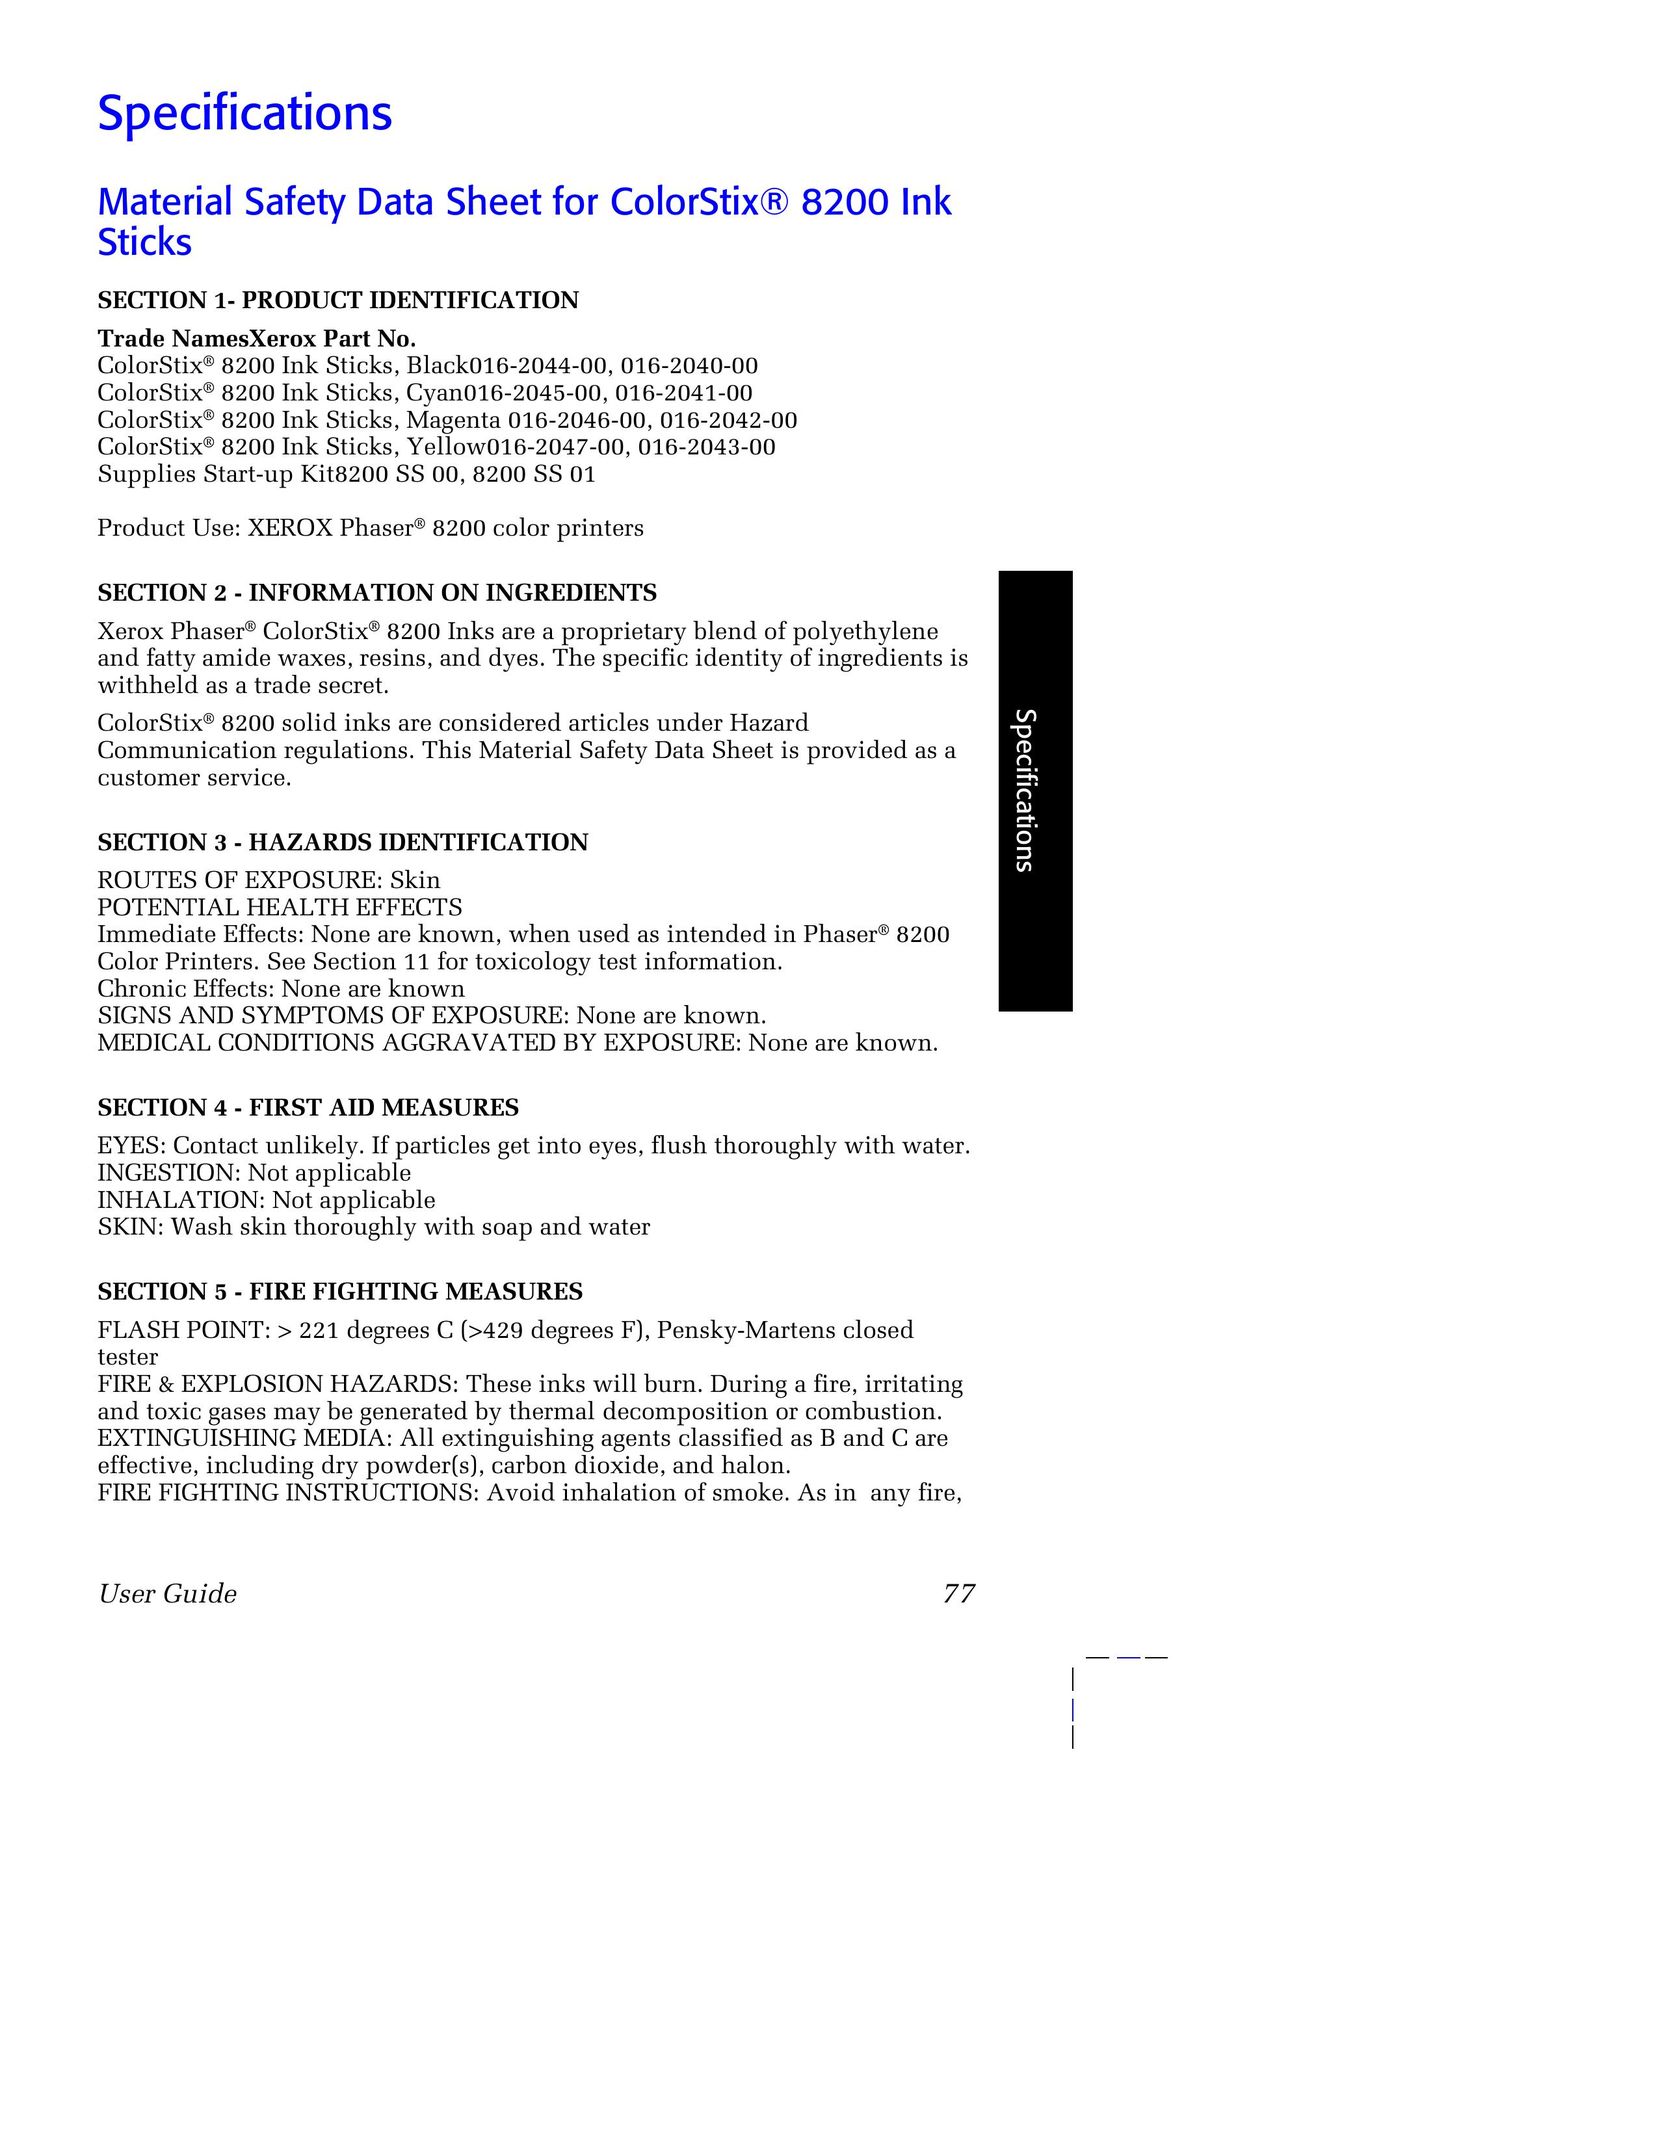 Xerox 016-2046-00 Printer Accessories User Manual